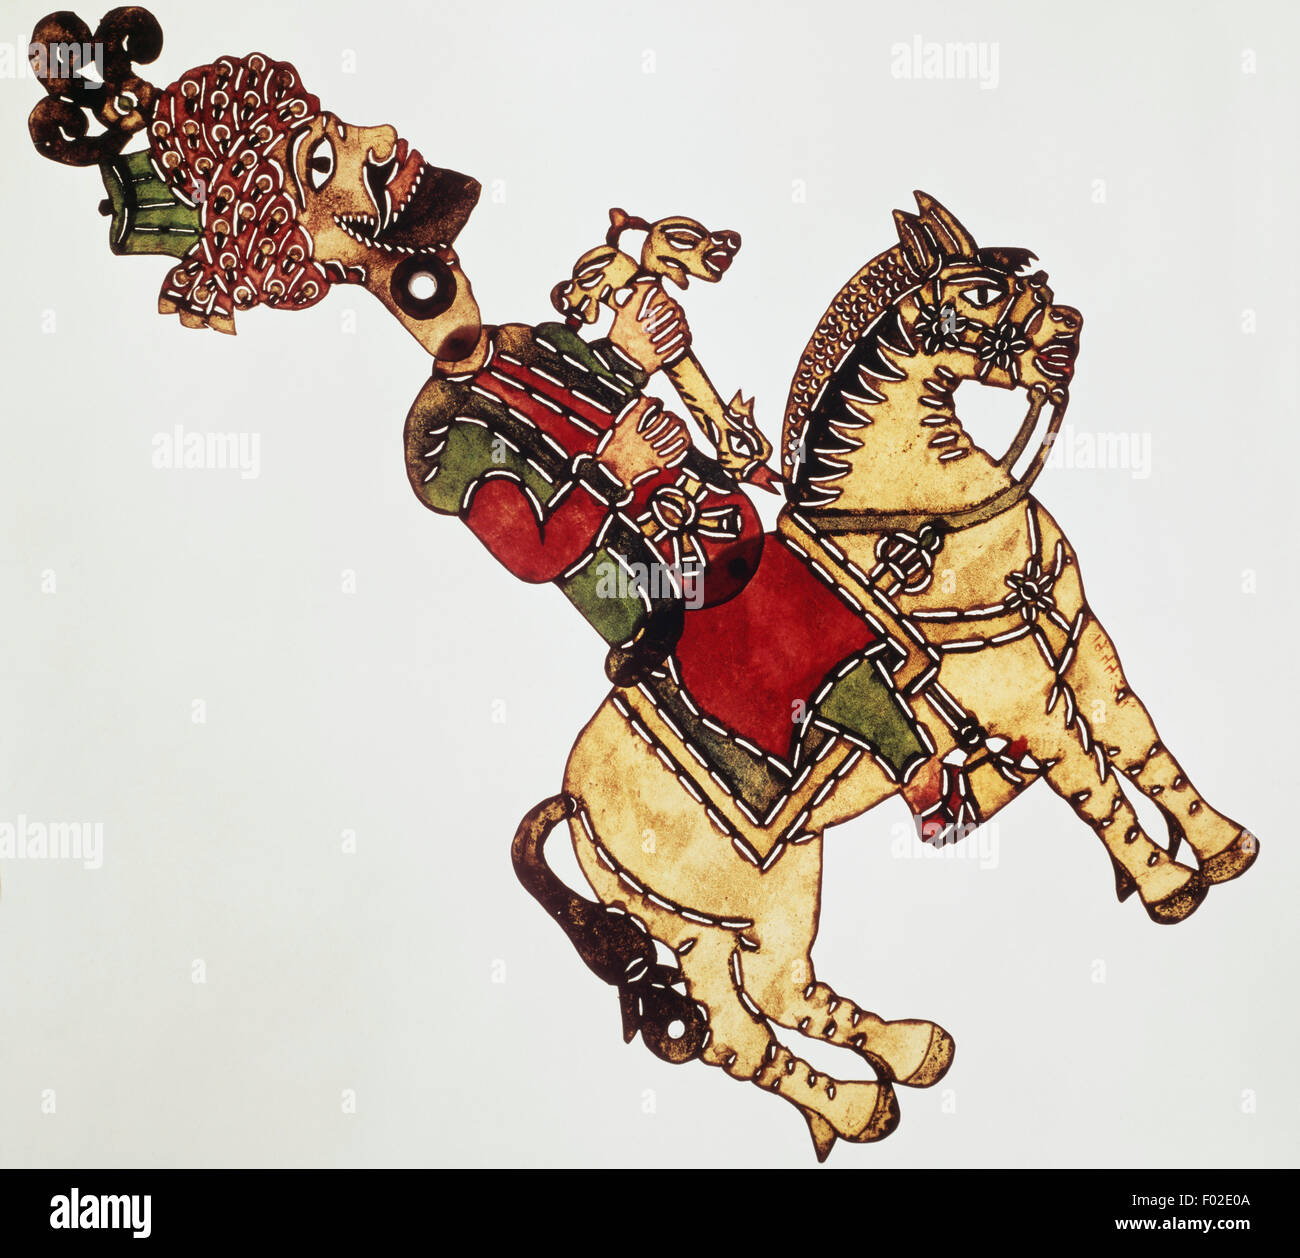 Knight riding a horse, shadow theatre figure, Turkey. Stock Photo